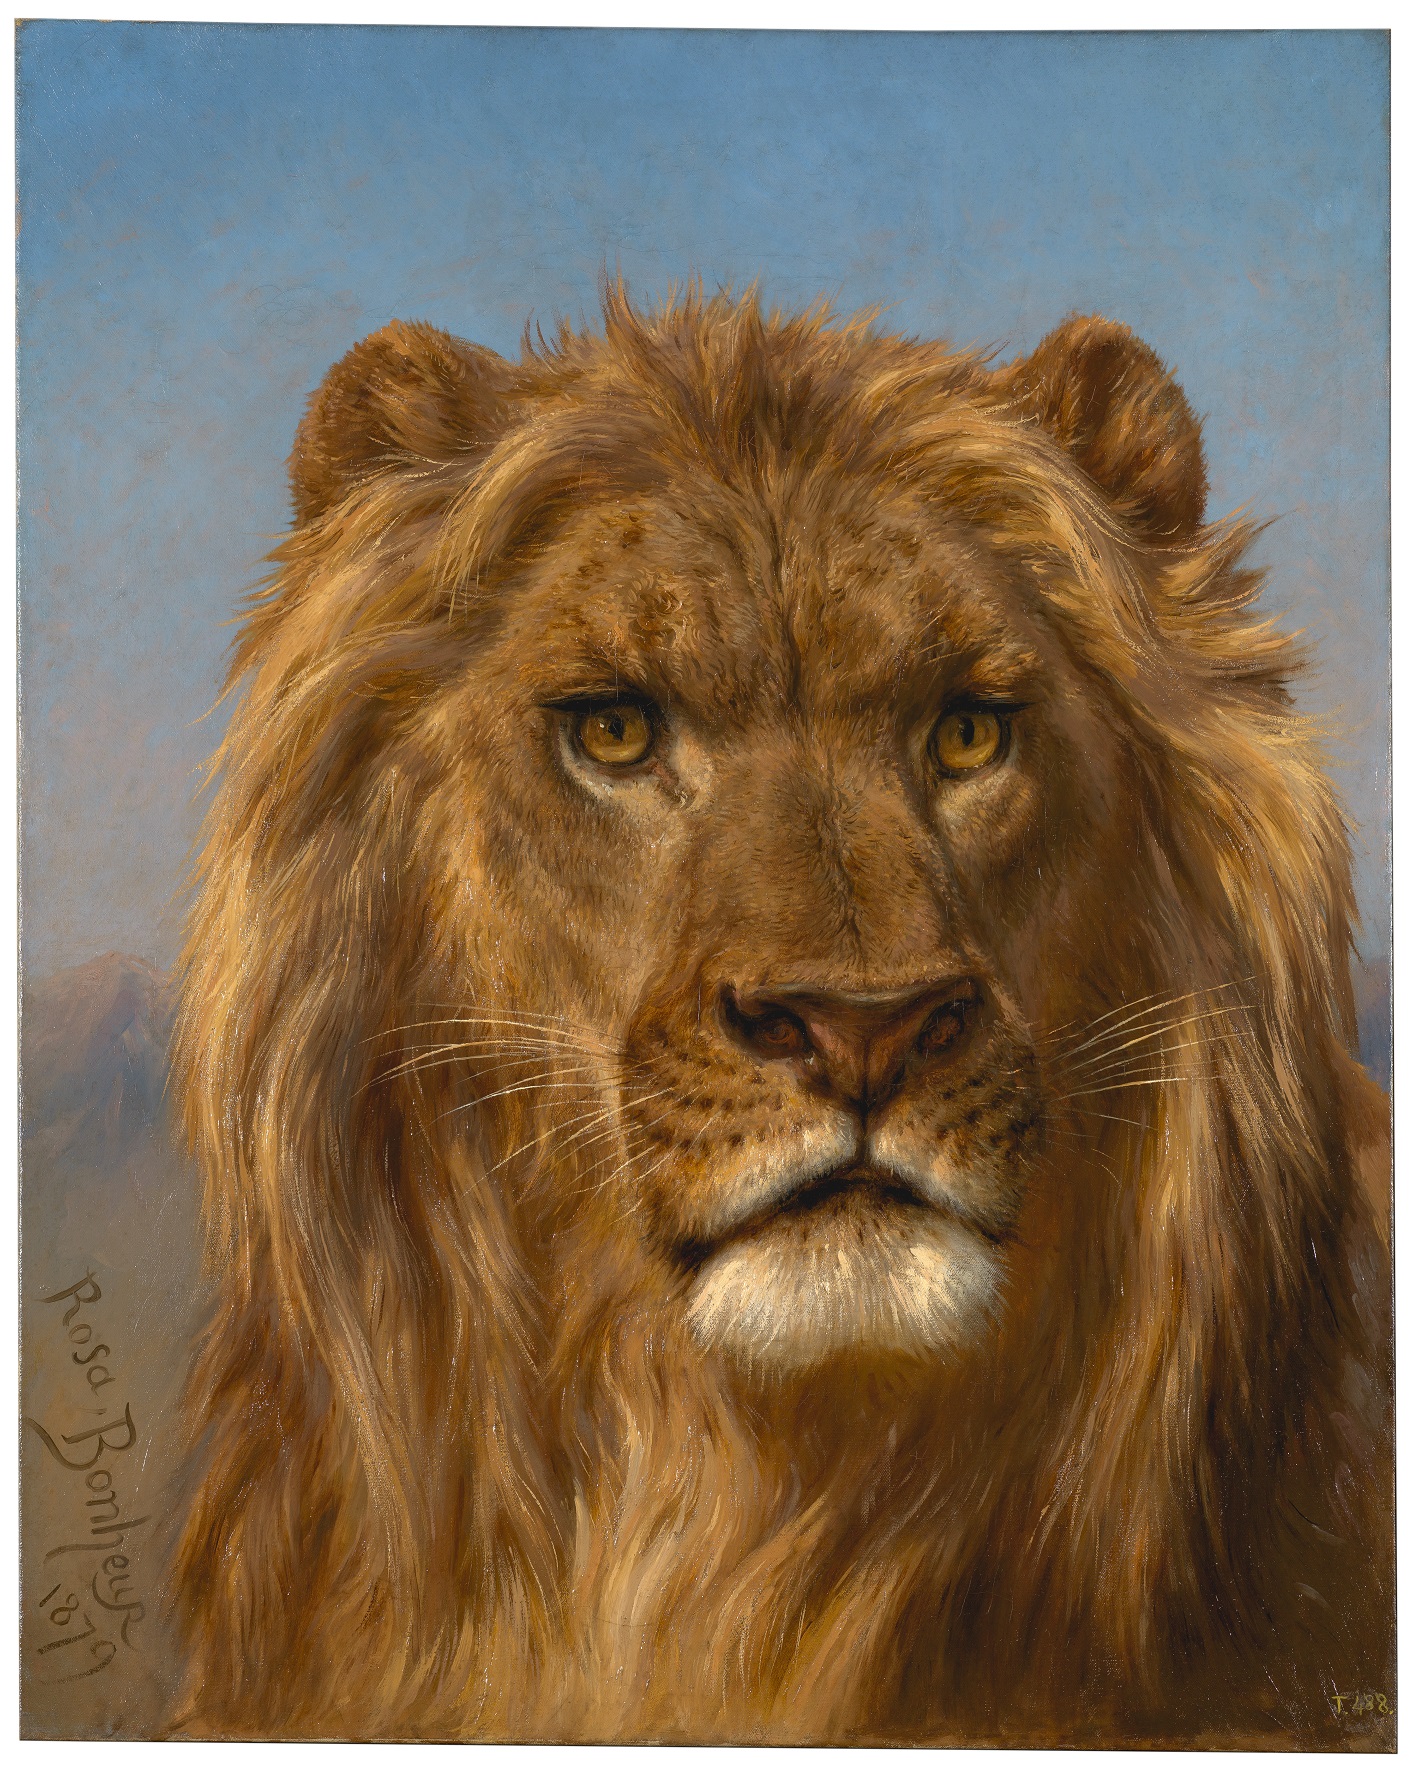 Le Lion - Collection du Prado